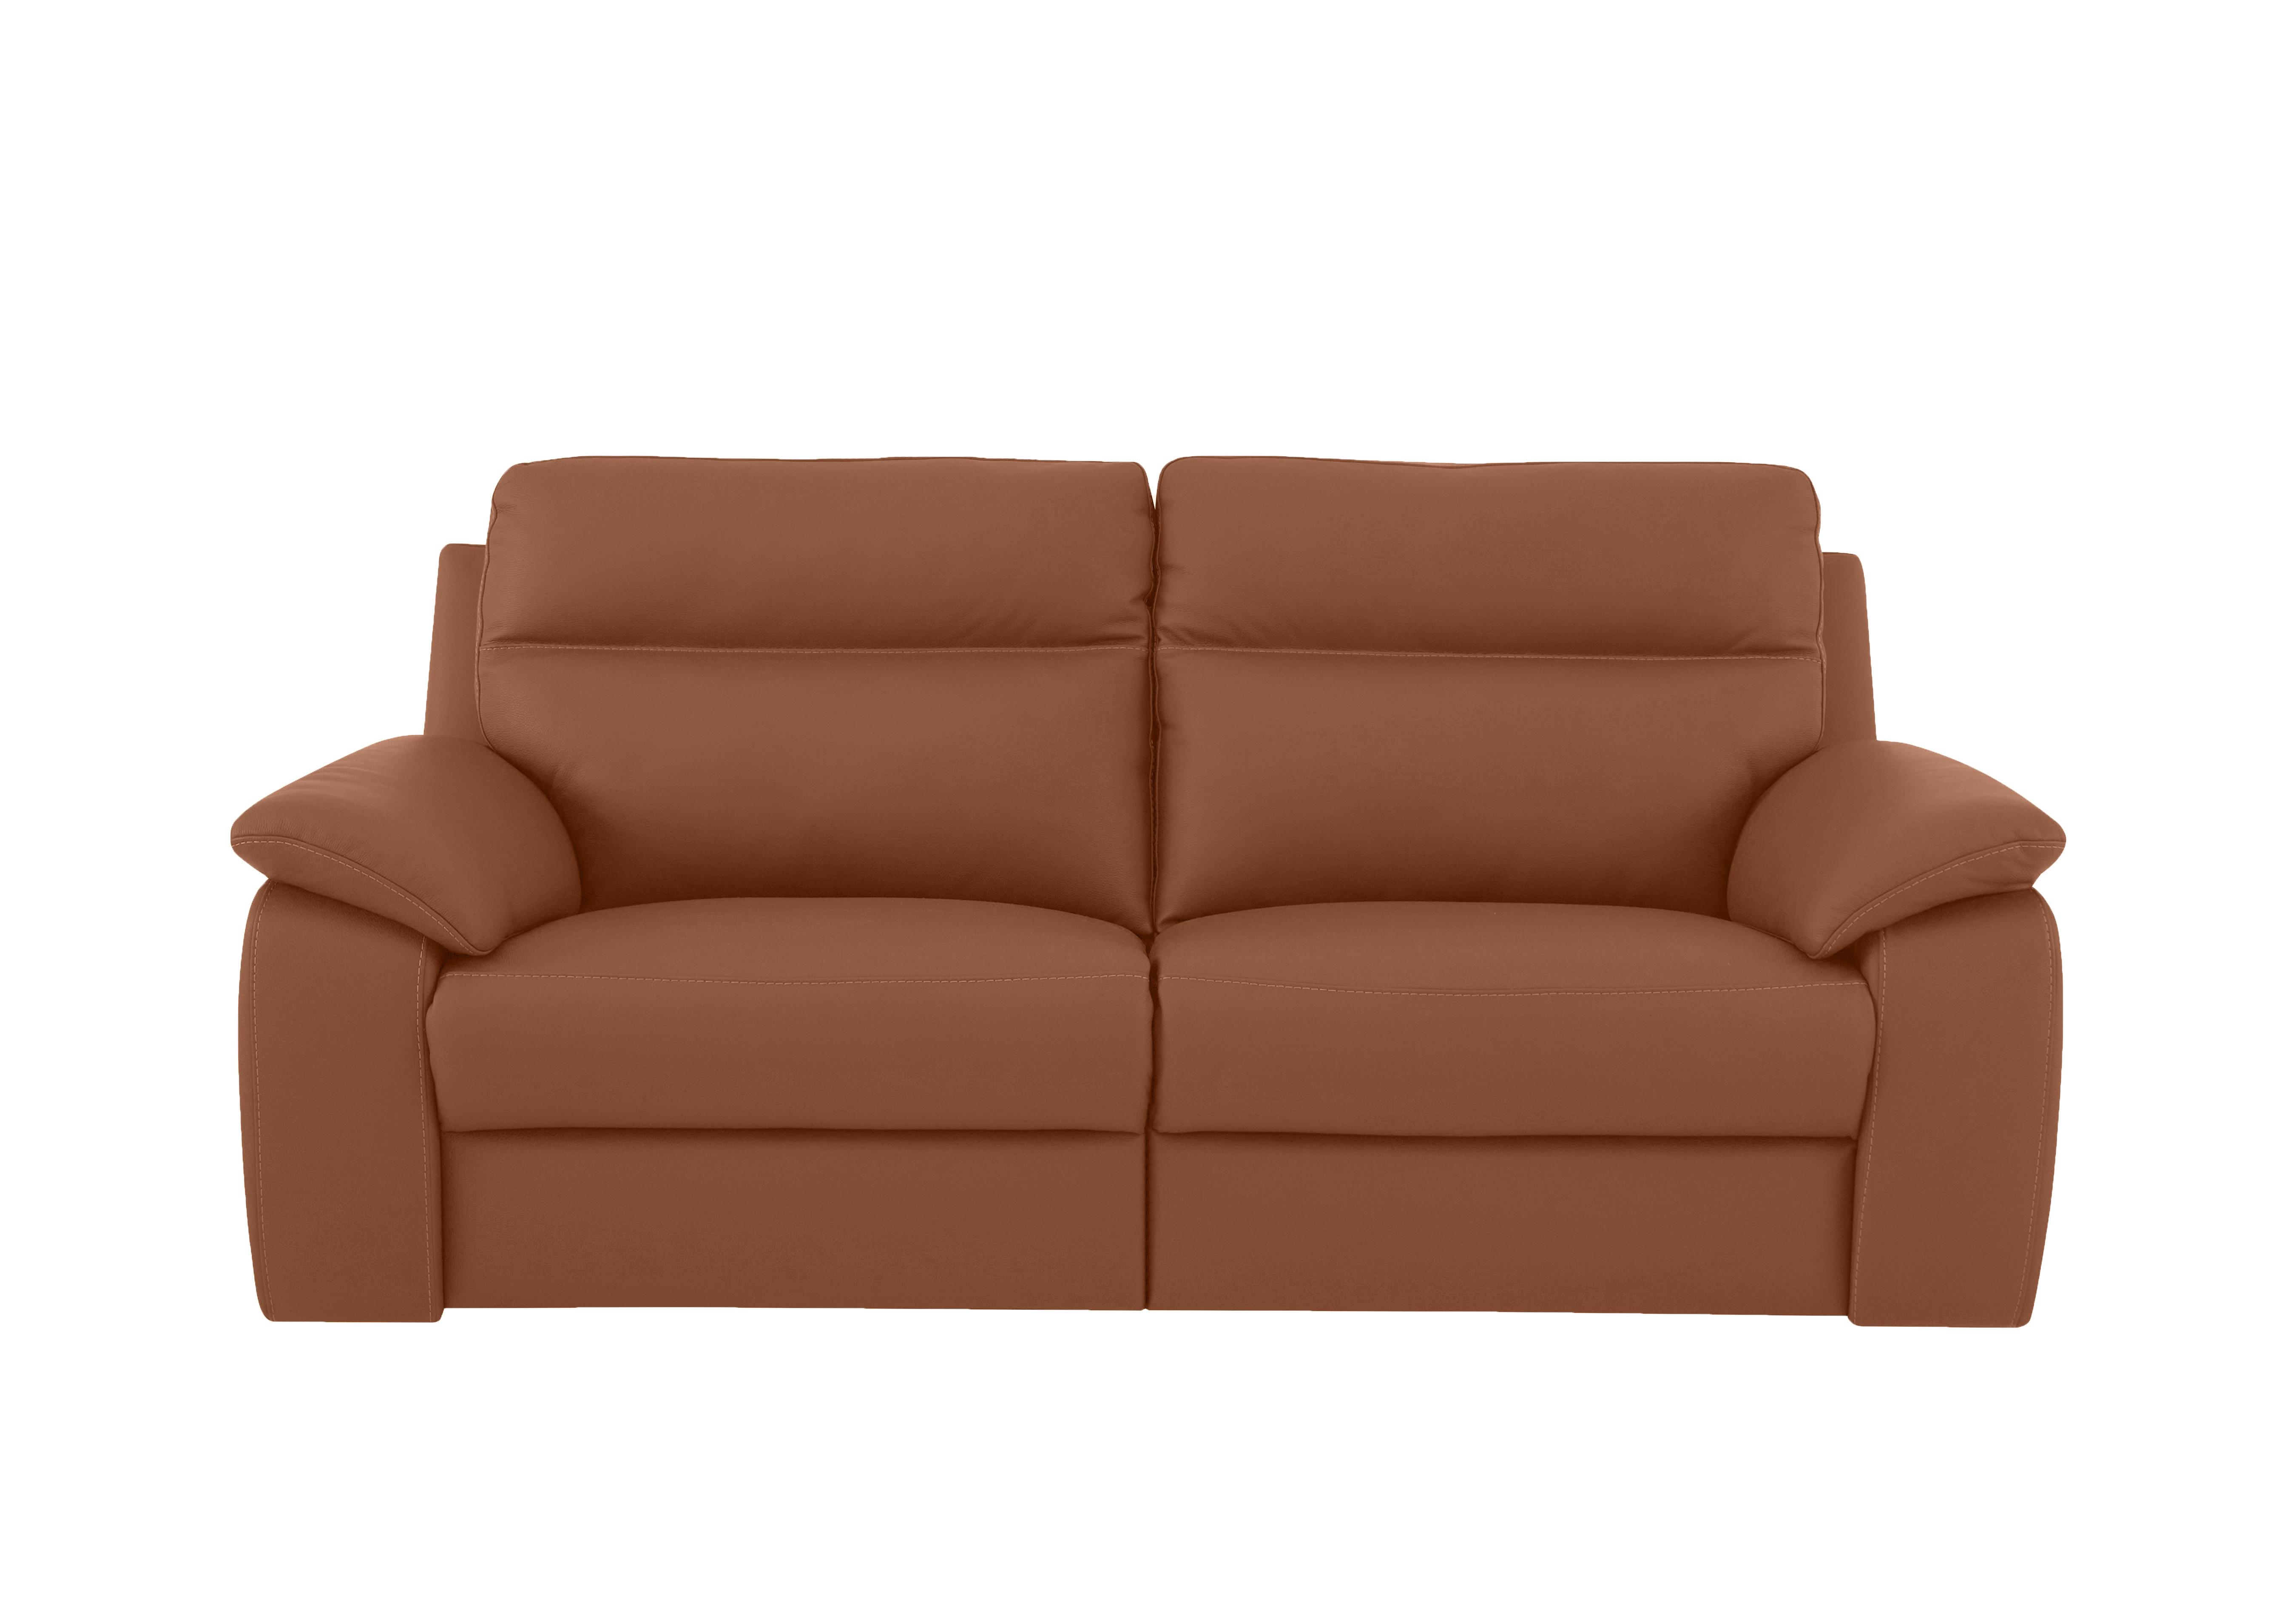 Pepino 3 Seater Leather Sofa in 363 Torello Cognac on Furniture Village